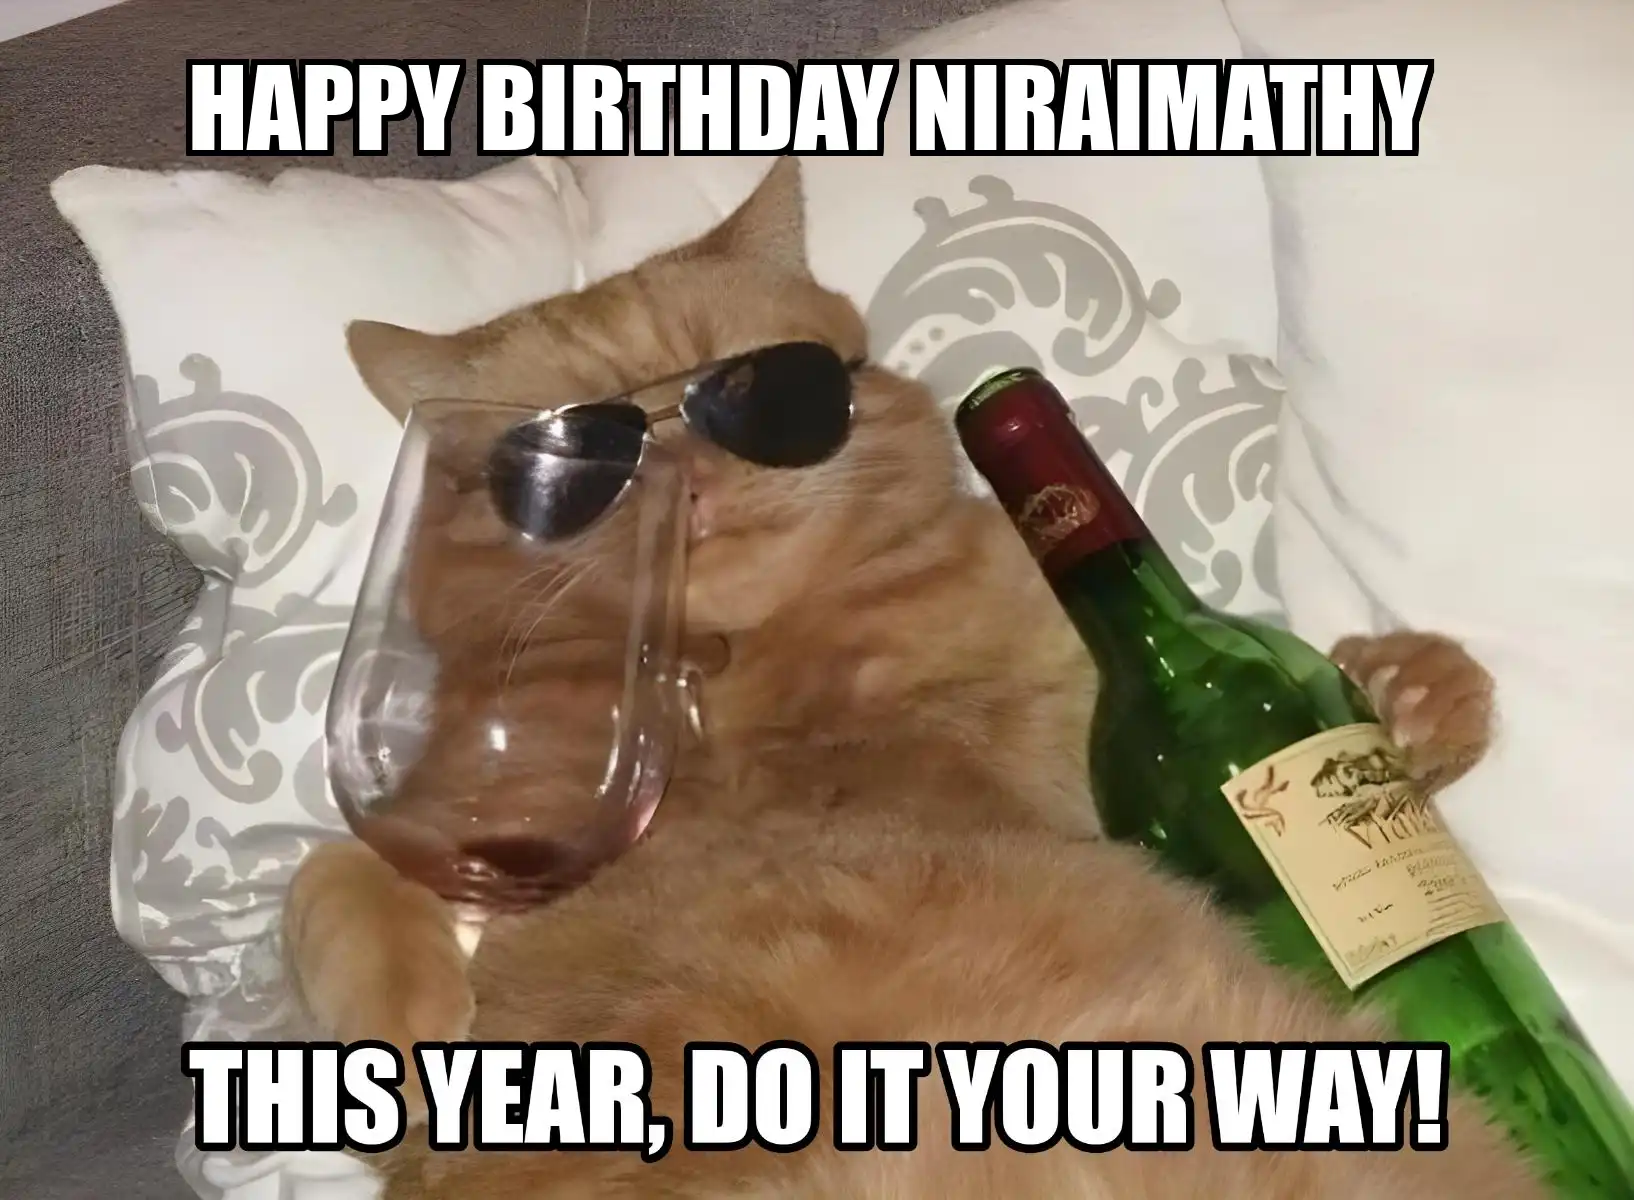 Happy Birthday Niraimathy This Year Do It Your Way Meme